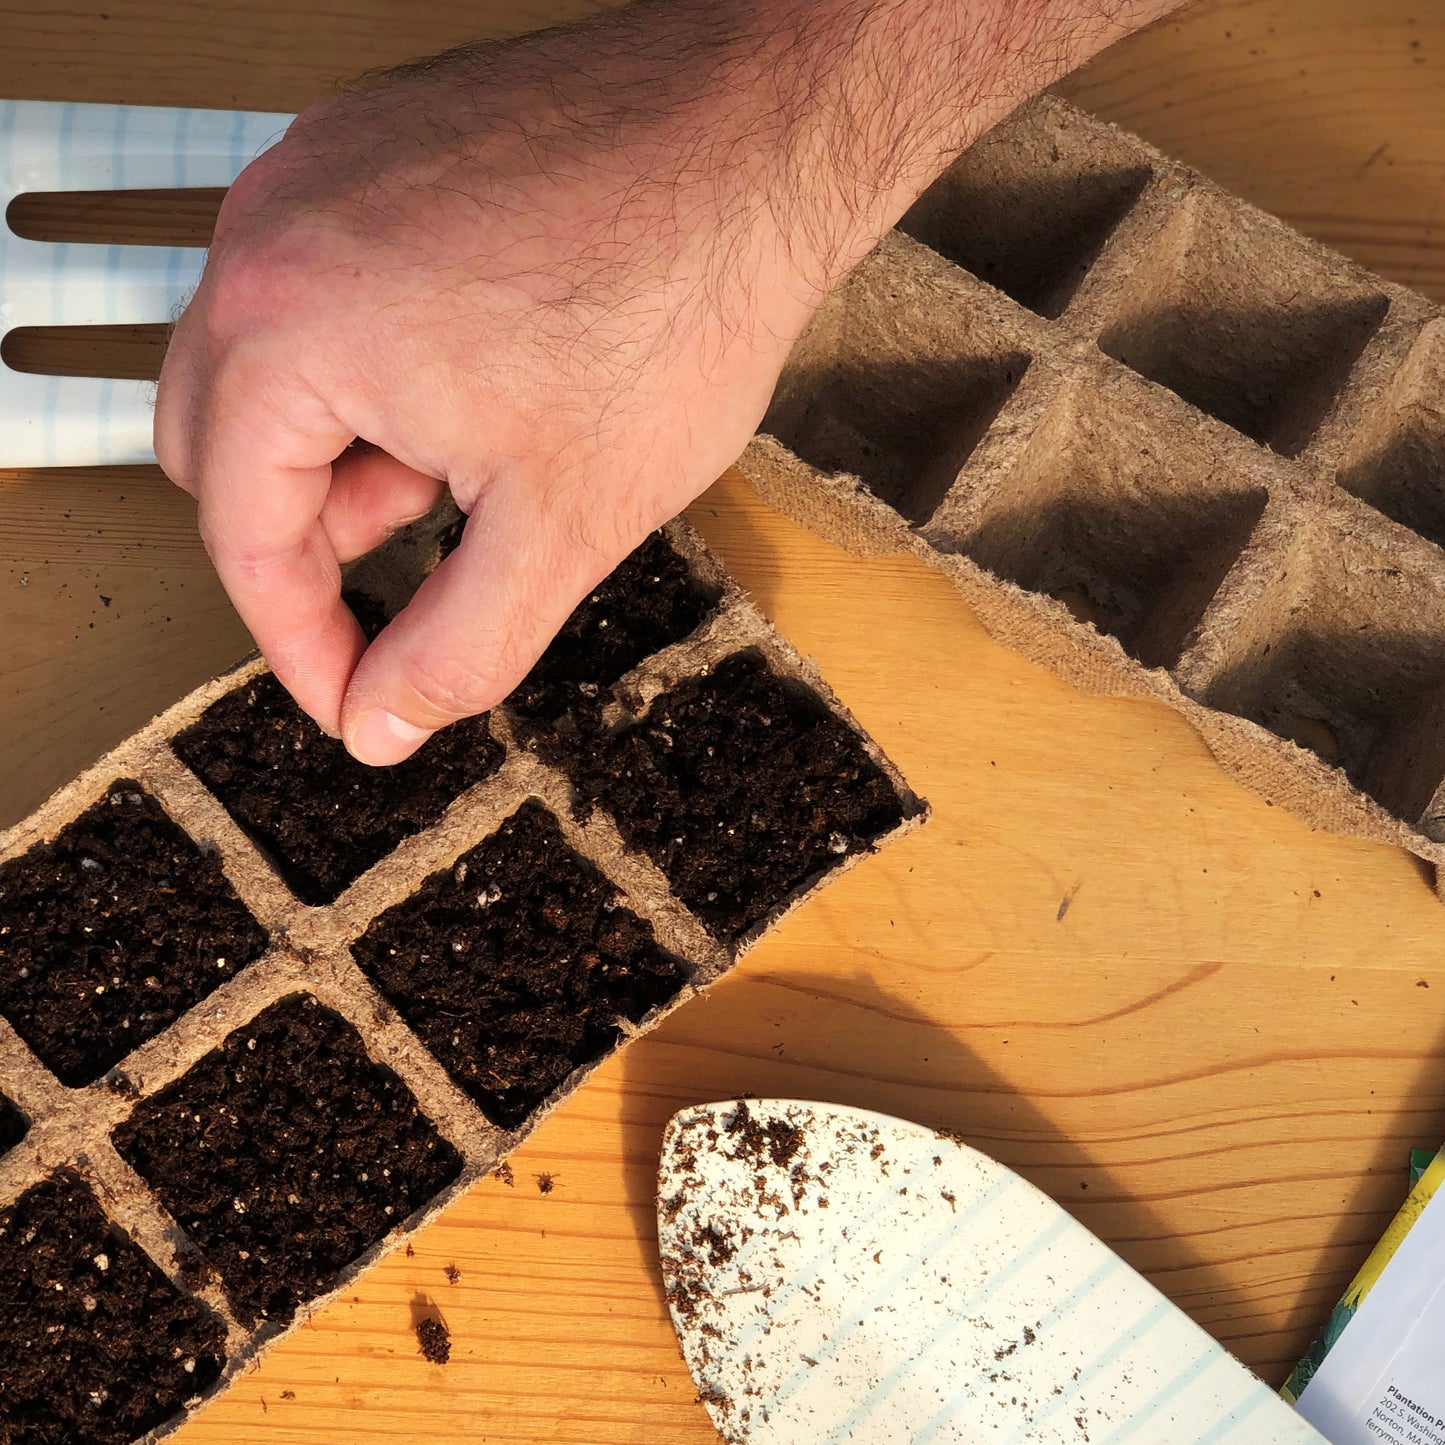 Start Armenian Yard Long Cucumber seeds in biodegradable paper or peat strips.